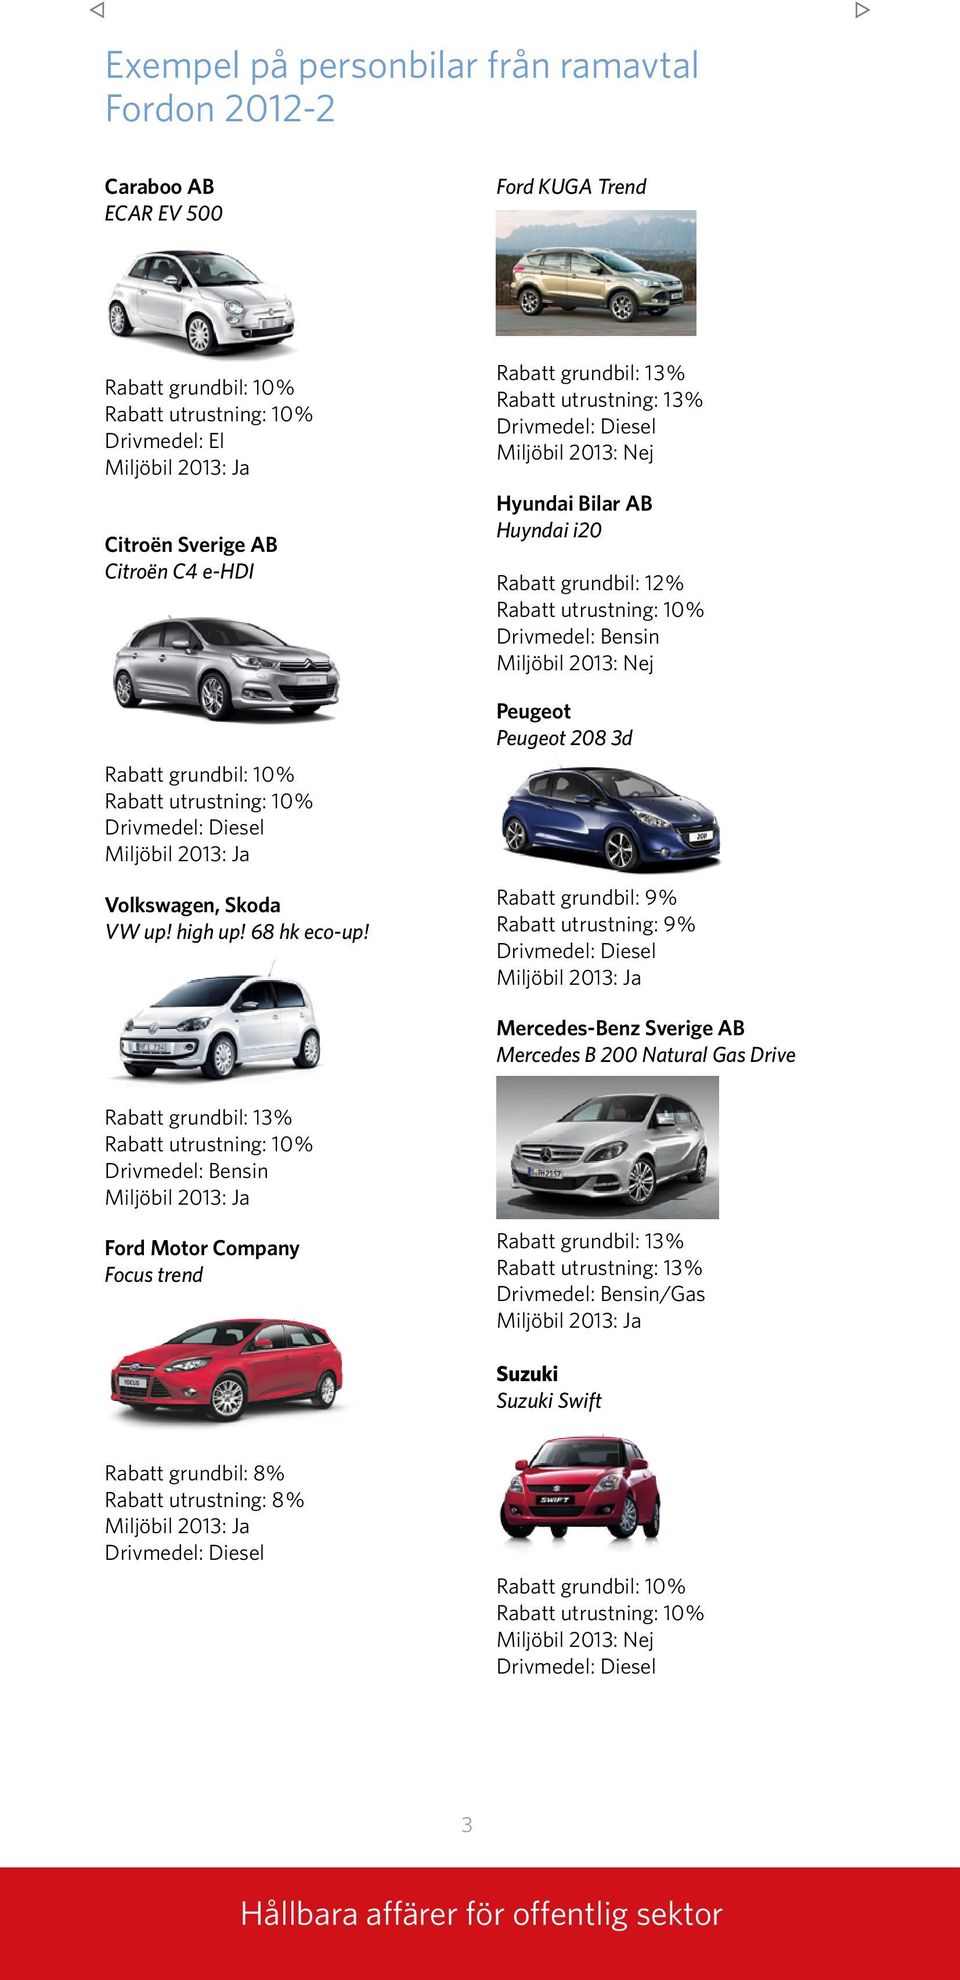 Rabatt utrustning: 13% Hyundai Bilar AB Huyndai i20 Rabatt grundbil: 12% Drivmedel: Bensin Peugeot Peugeot 208 3d Rabatt grundbil: 9% Rabatt utrustning: 9%